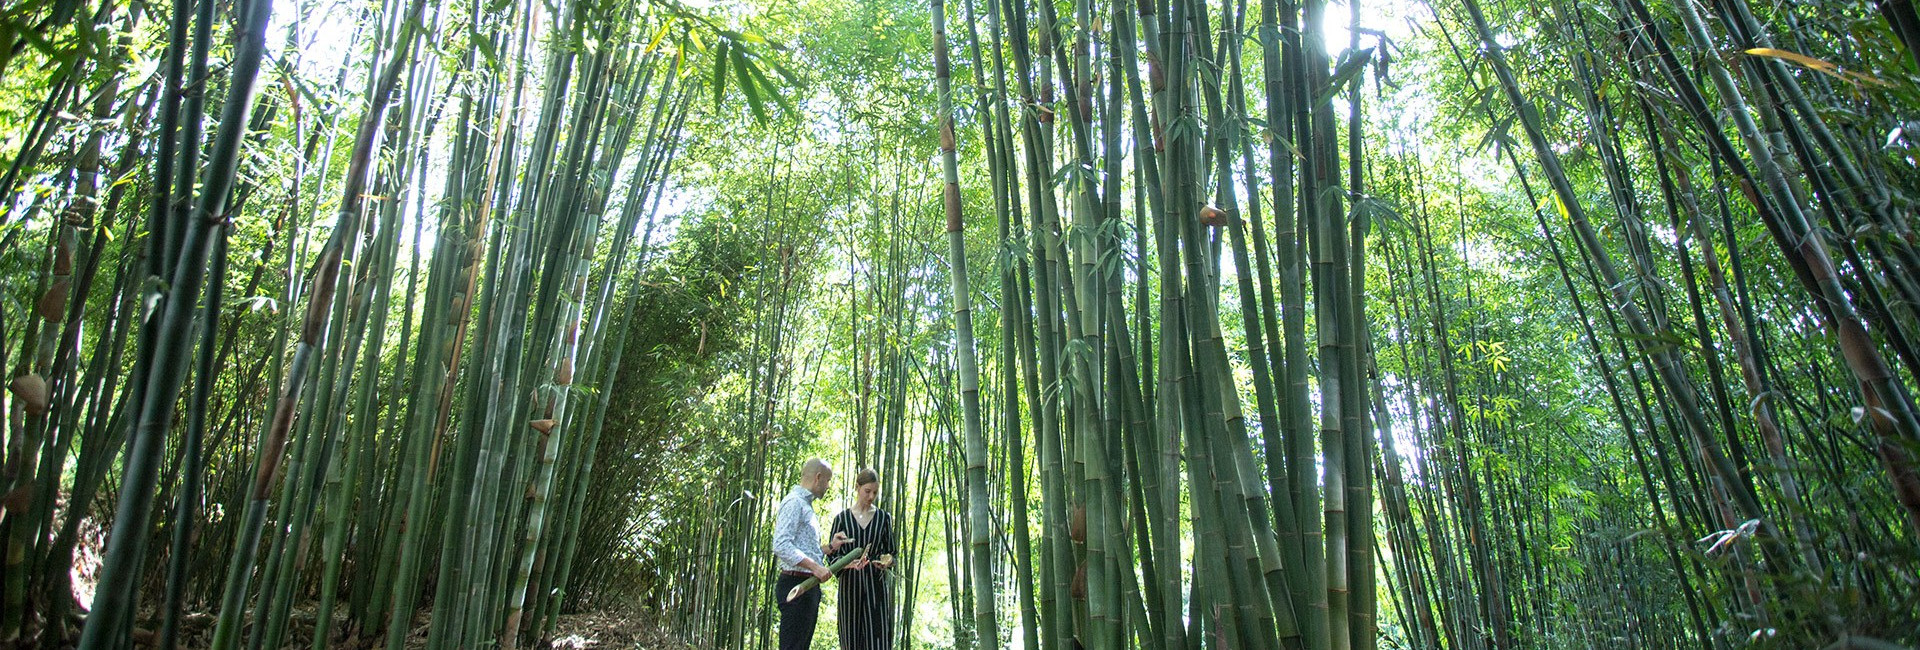 Bambus viden